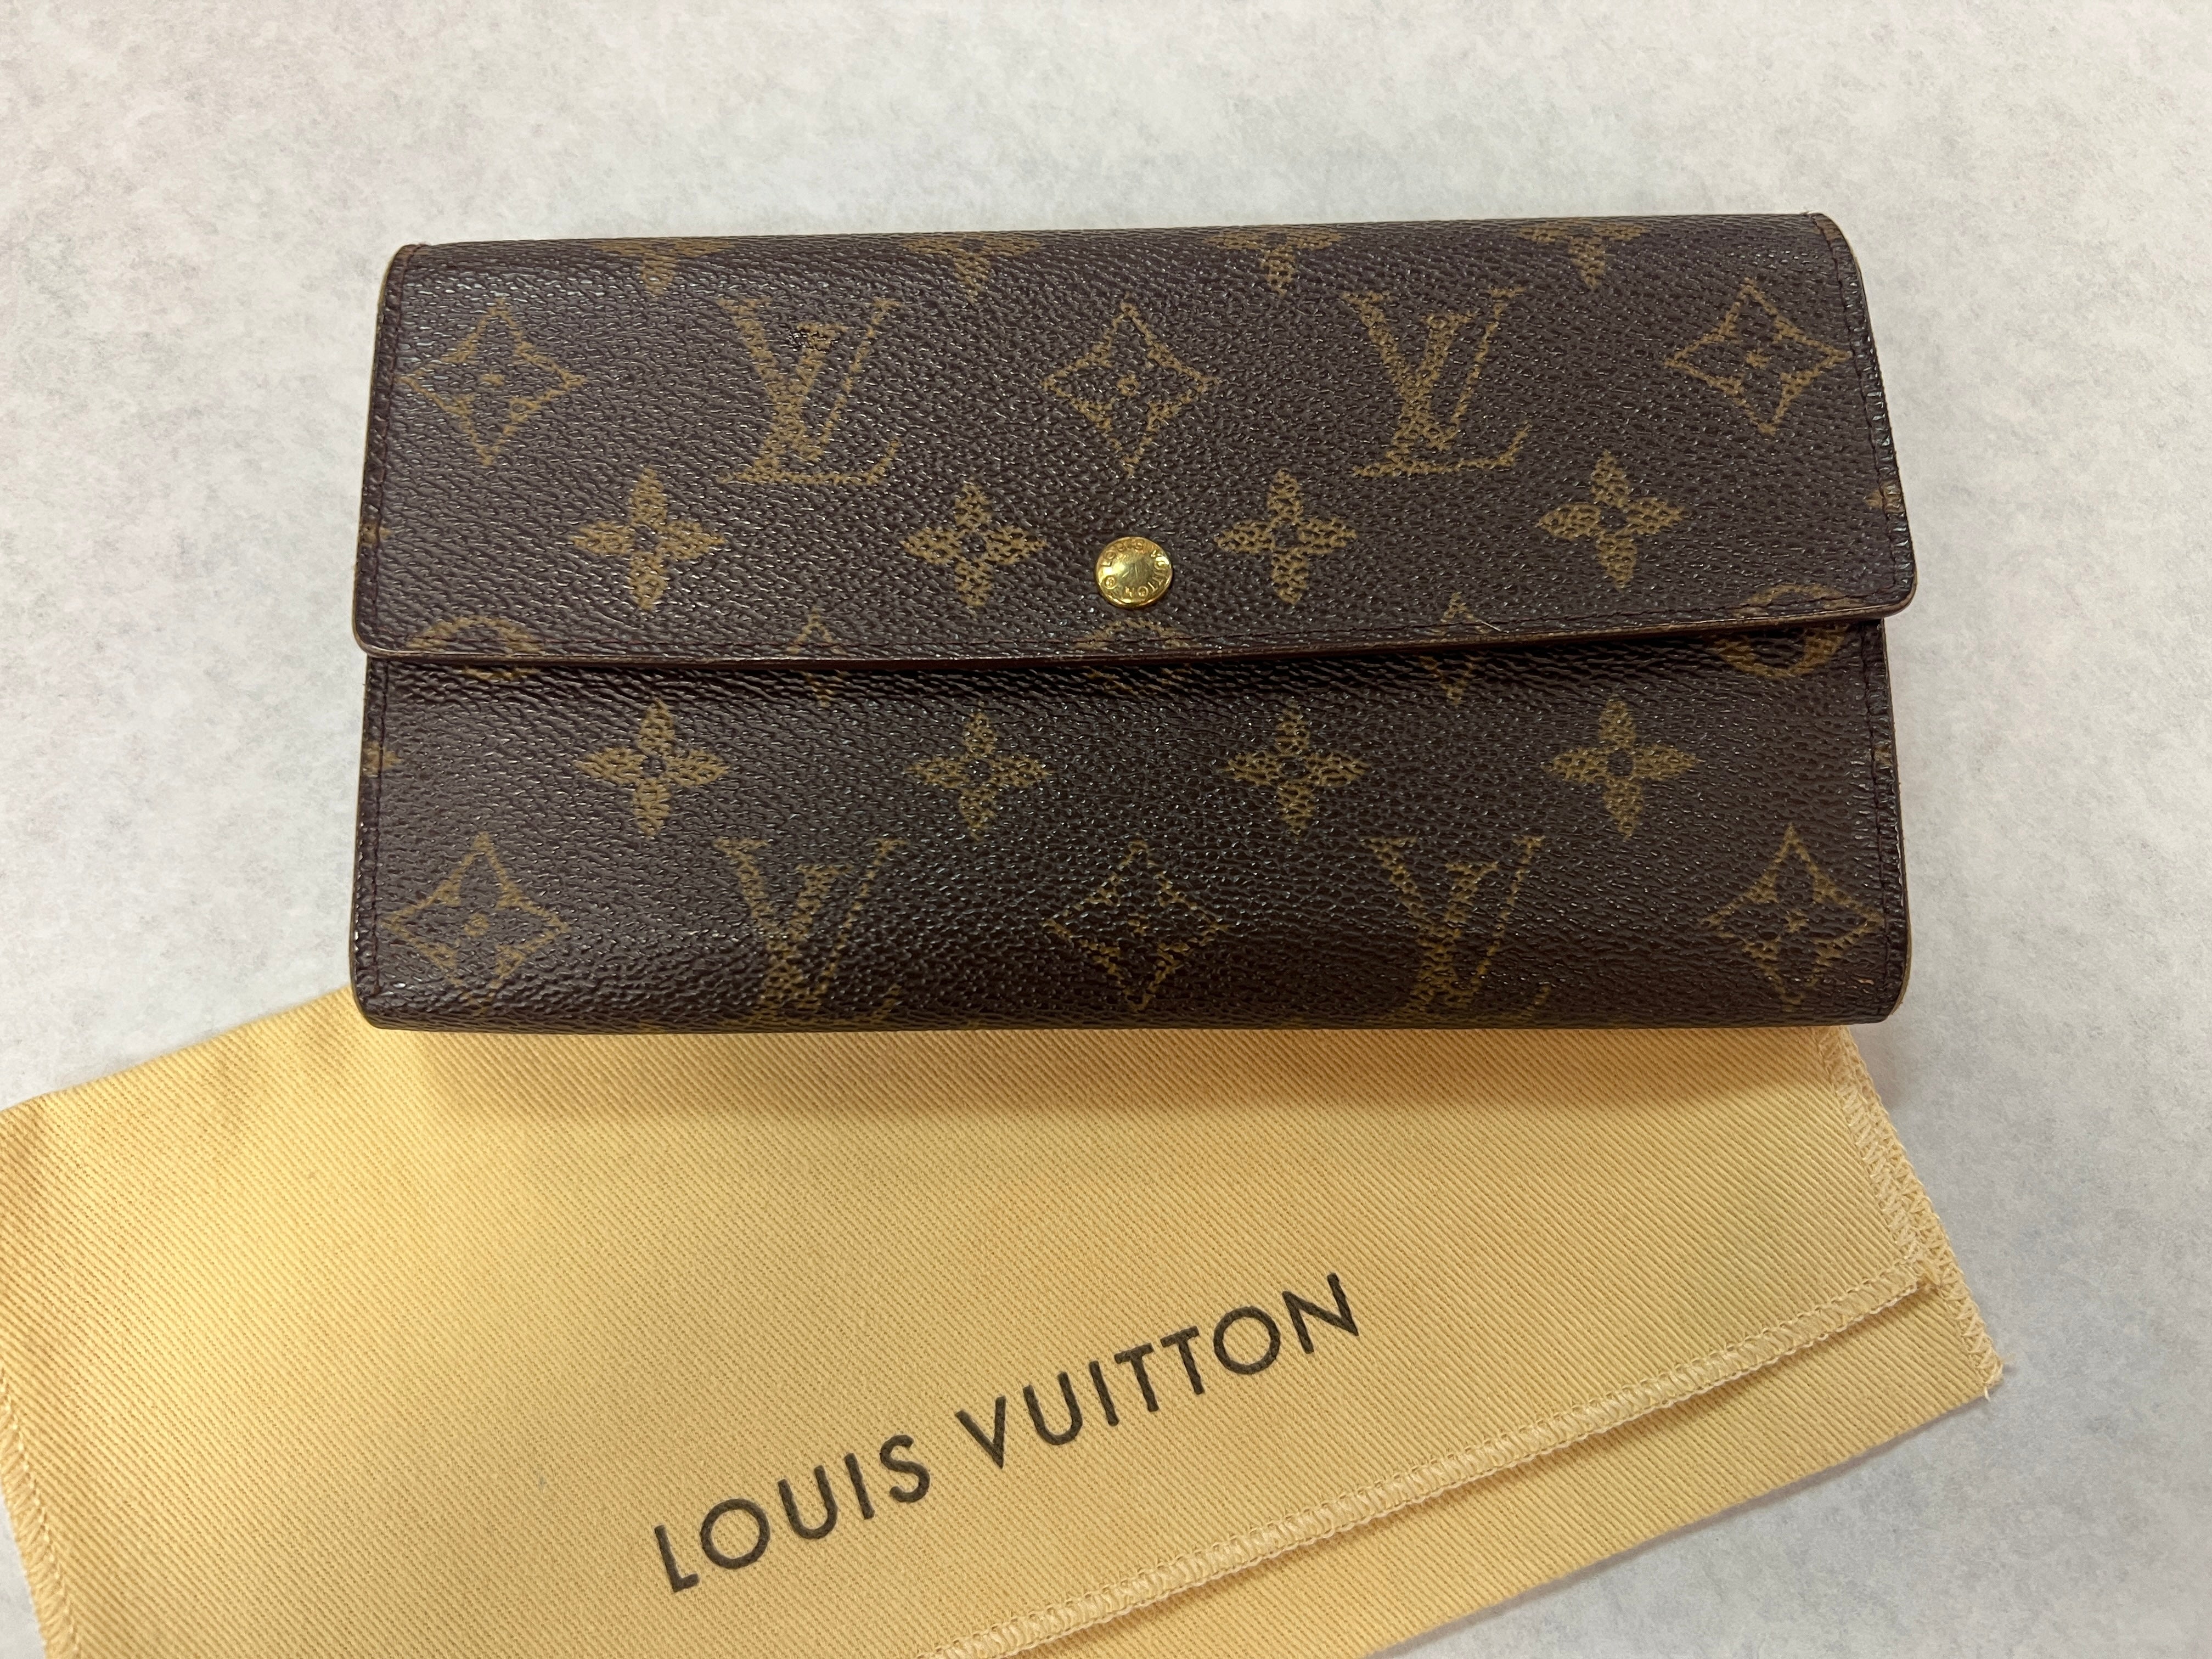 LOUIS VUITTON Louis Vuitton Long Wallet Portefeuille Sarah Retiro